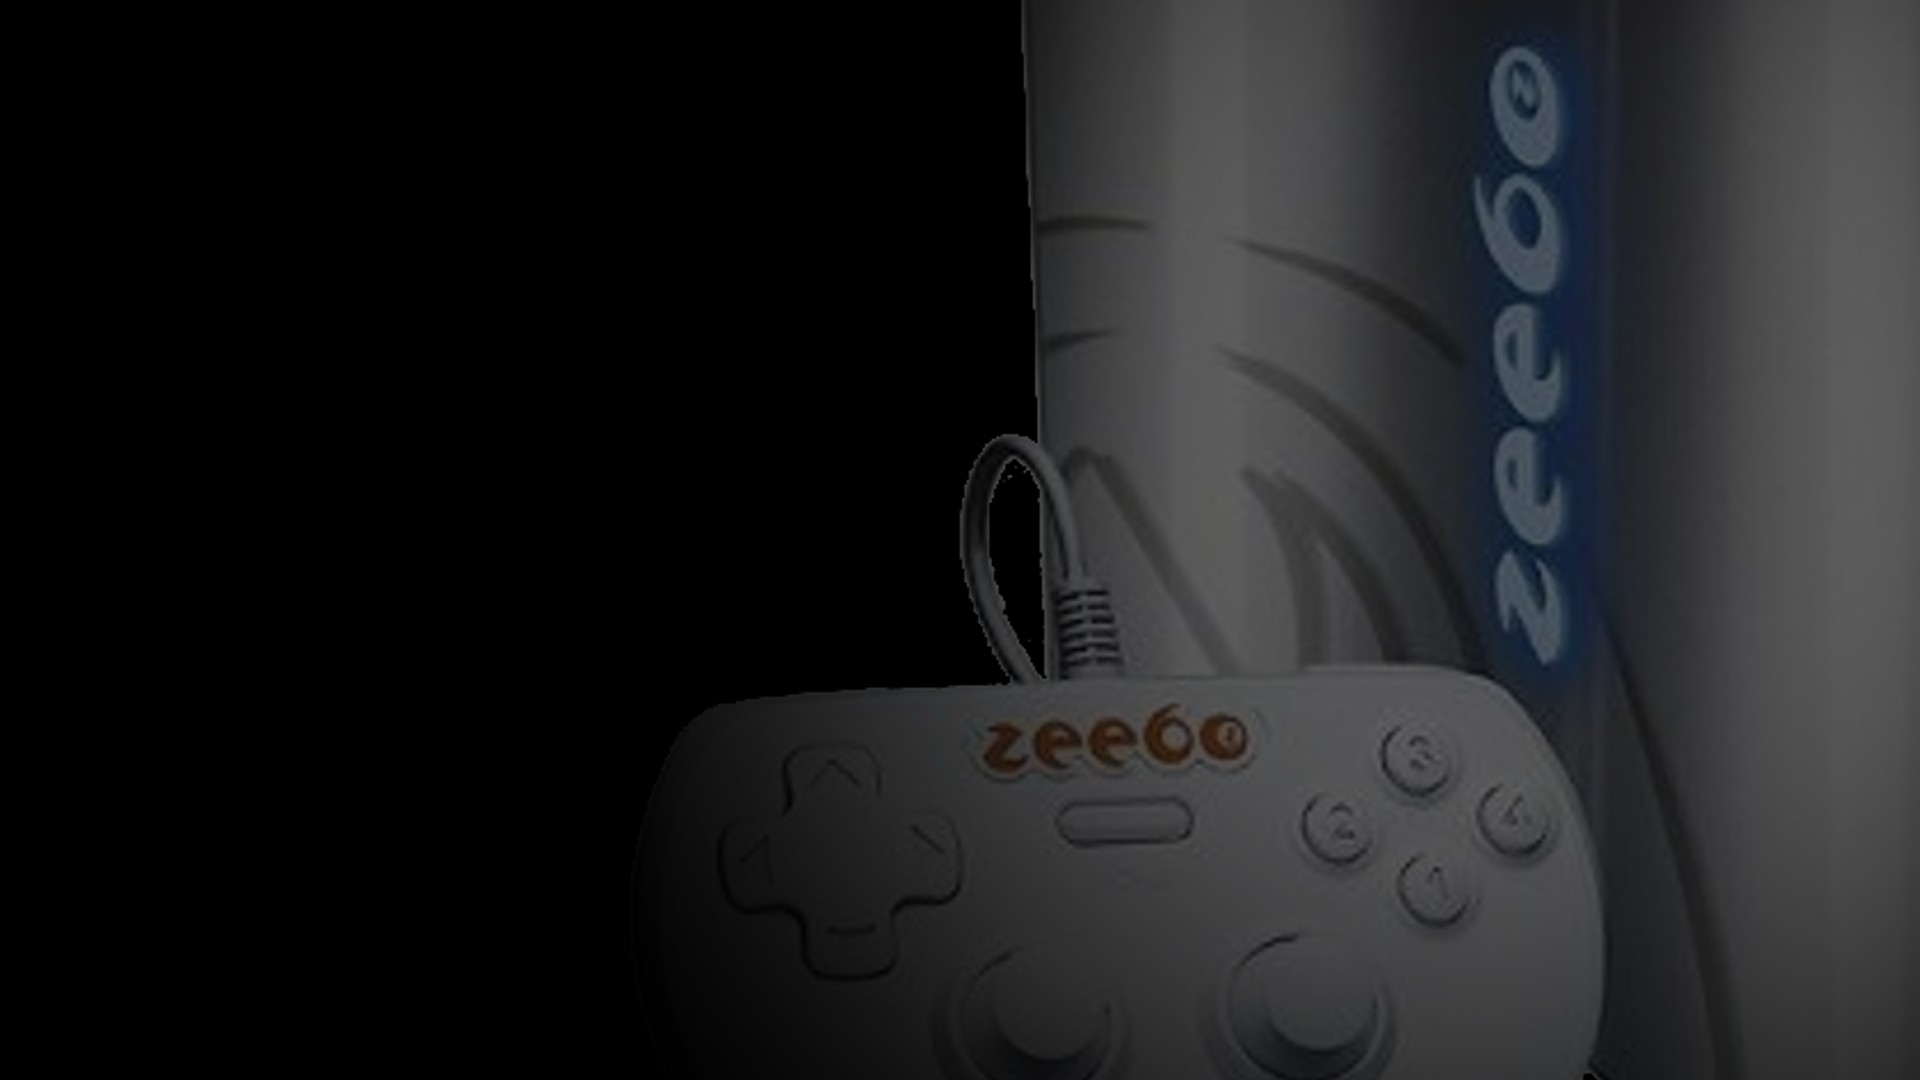 Imagem mostra o console Zeebo, da TEcToy